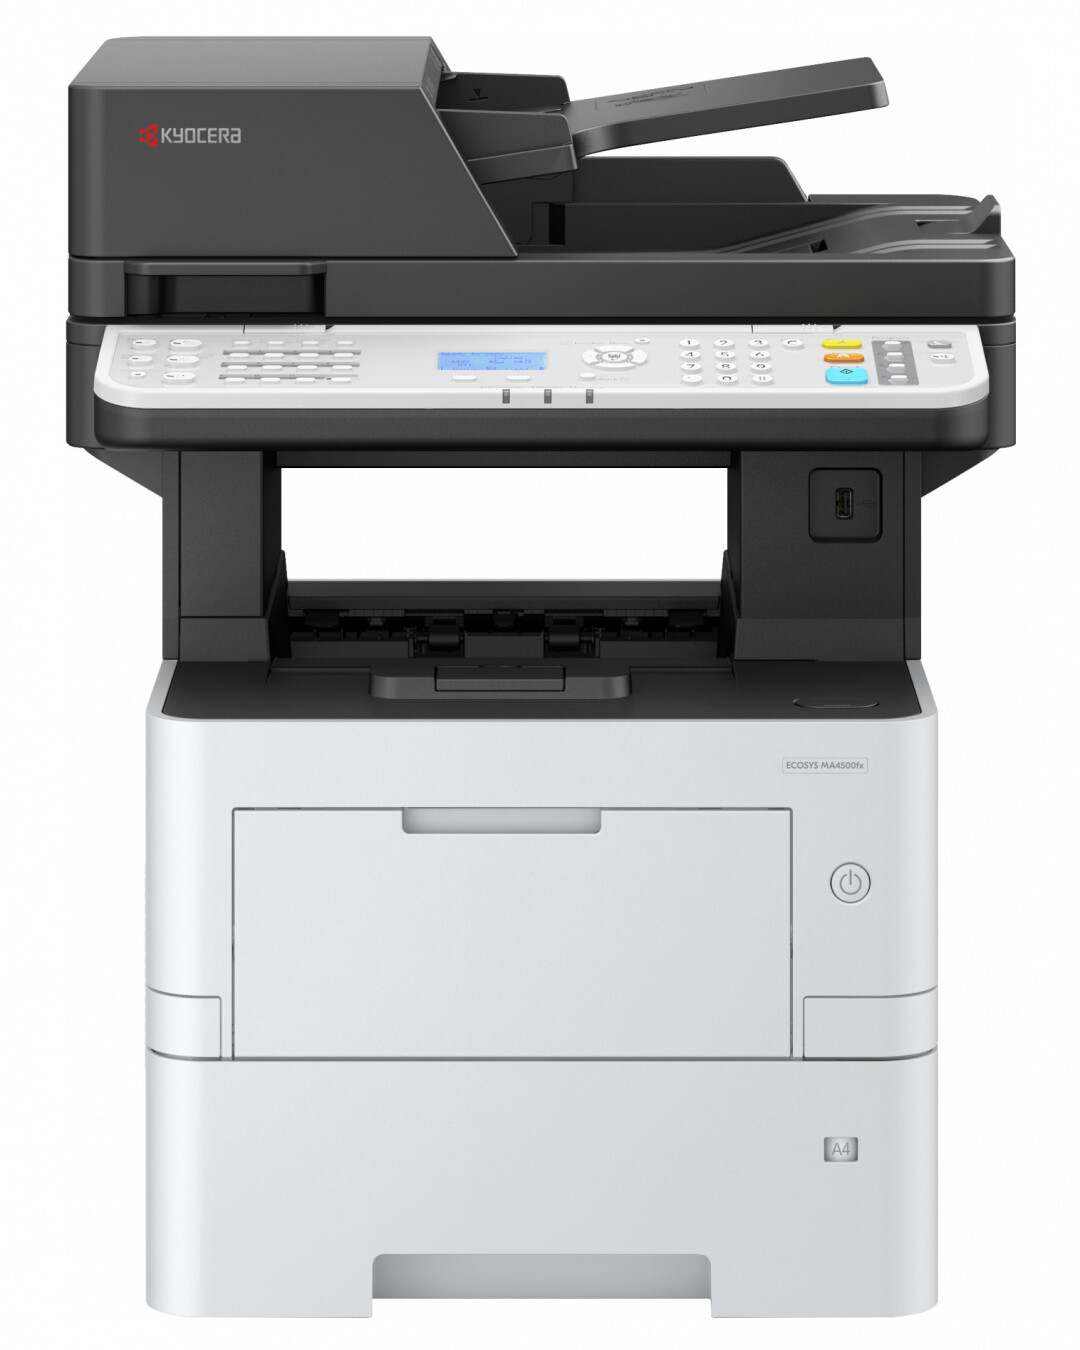 Kyocera-ECOSYS-MA4500ifx-SW-4-in-1-Laserdrucker